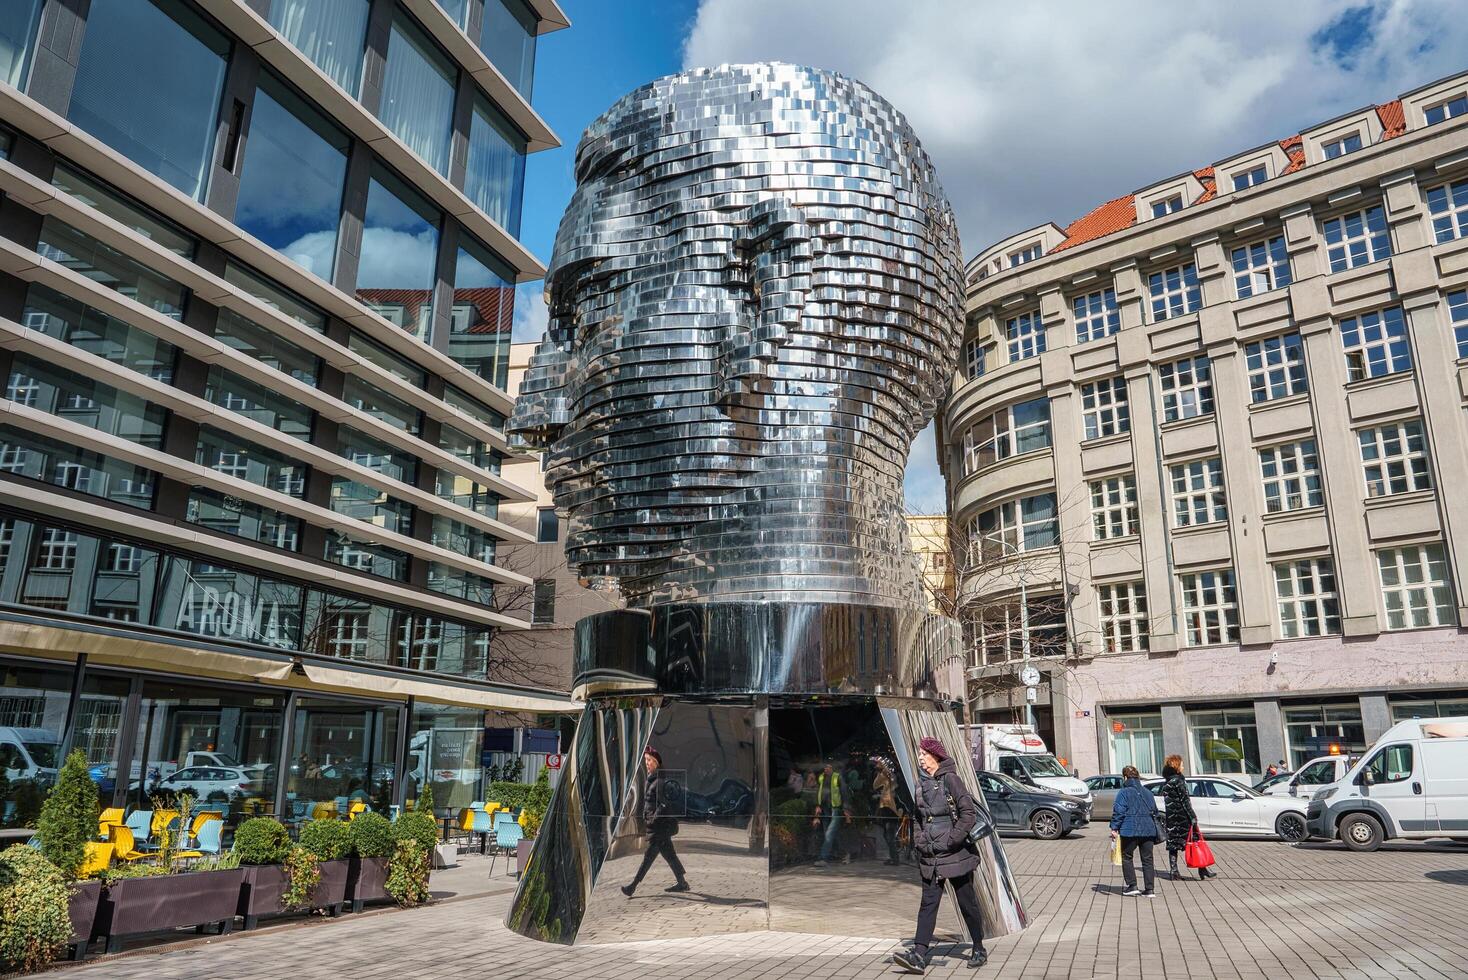 David Cerny head sculpture of Franz Kafka head in Prague. photo